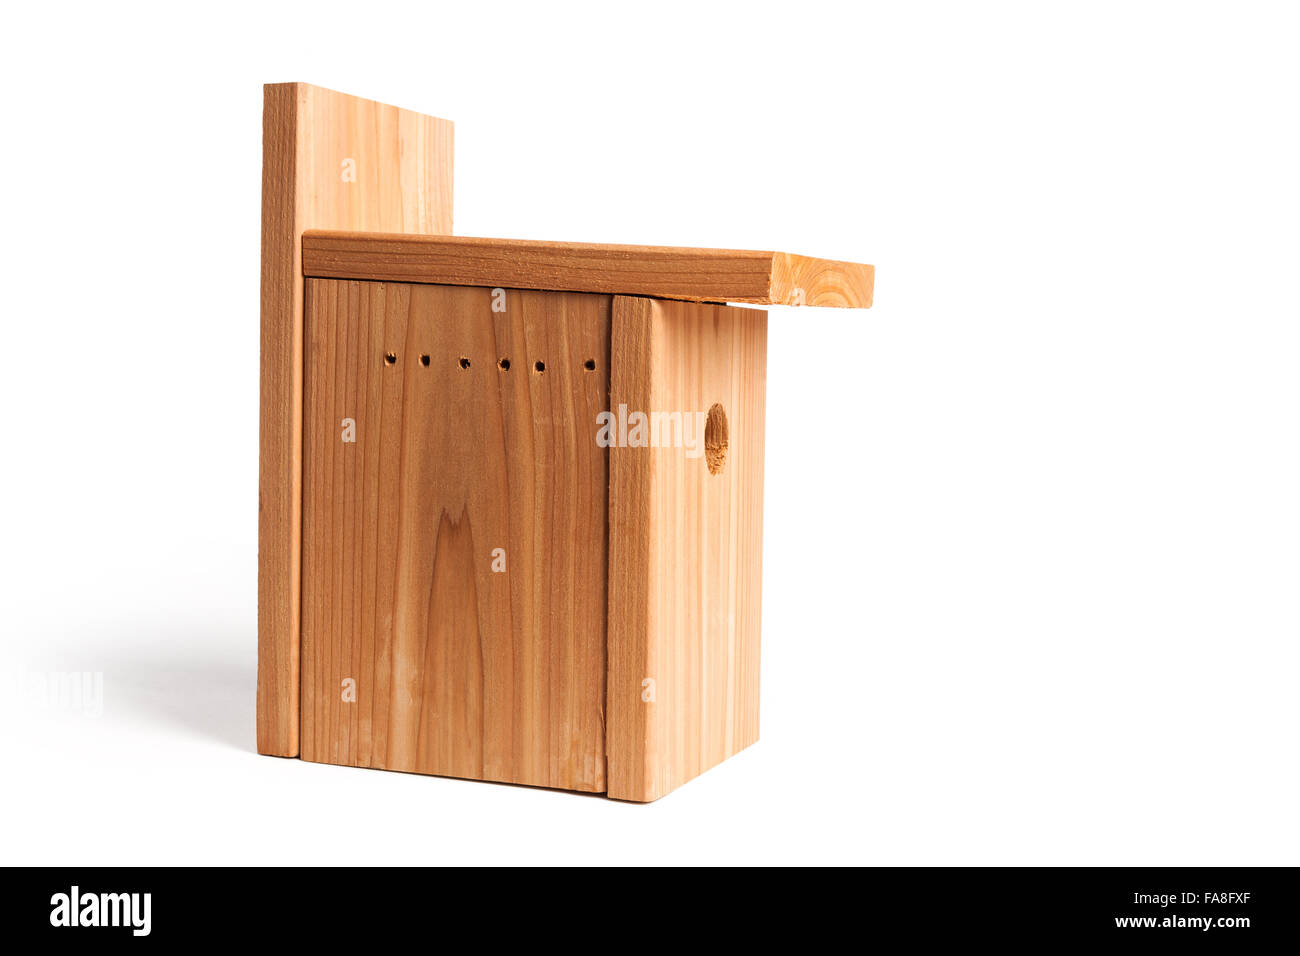 DIY wood birdhouse with white background Stock Photo